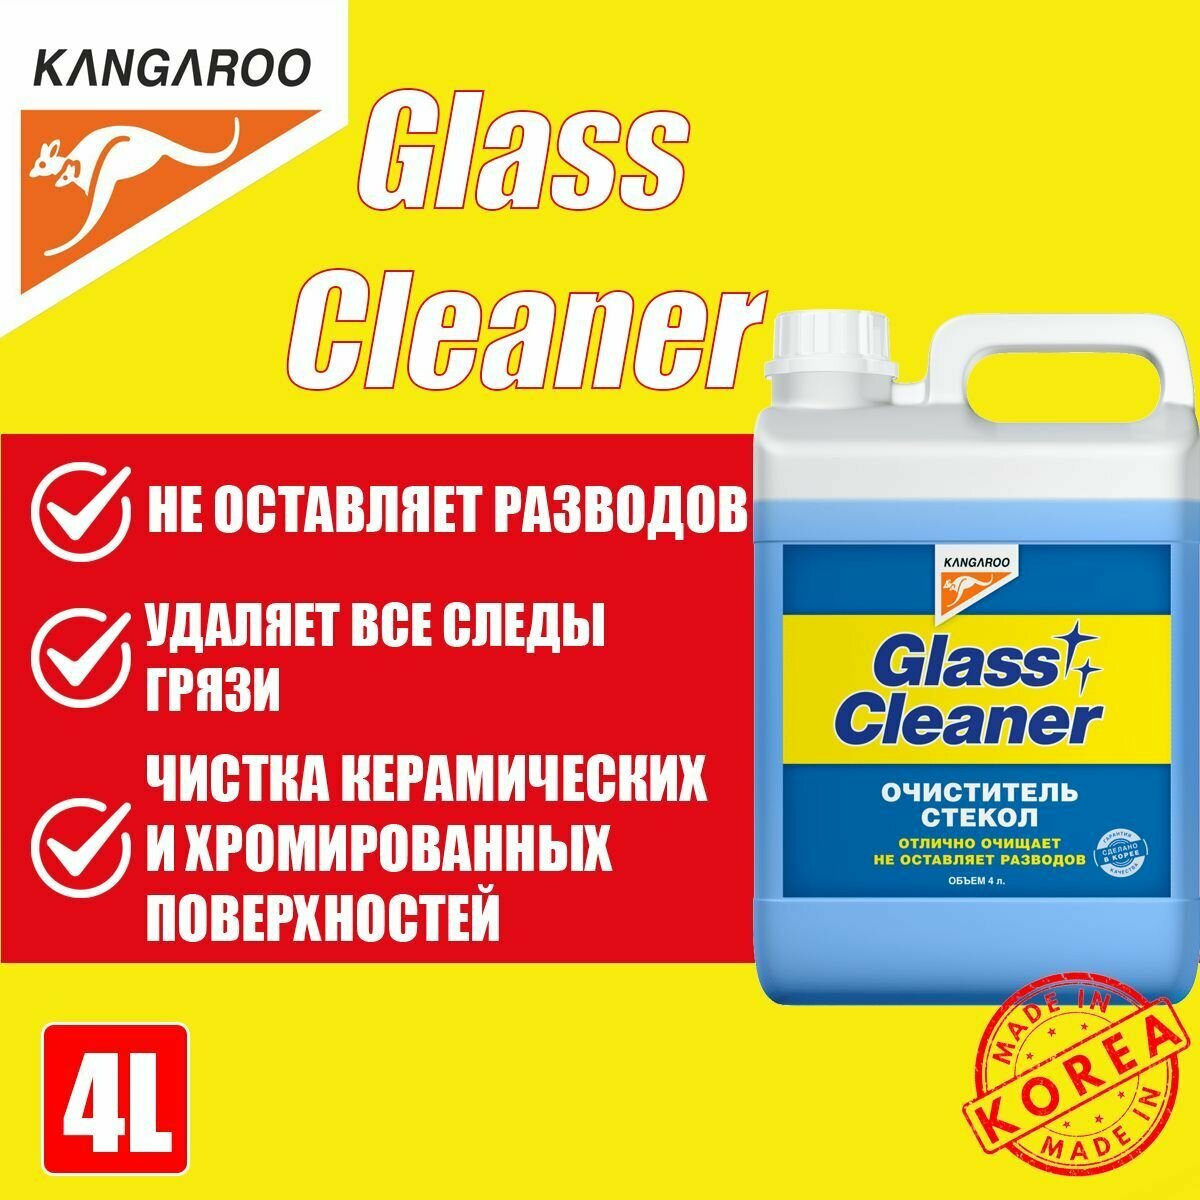 Glass Cleaner - Очиститель Стекол Kangaroo 4л